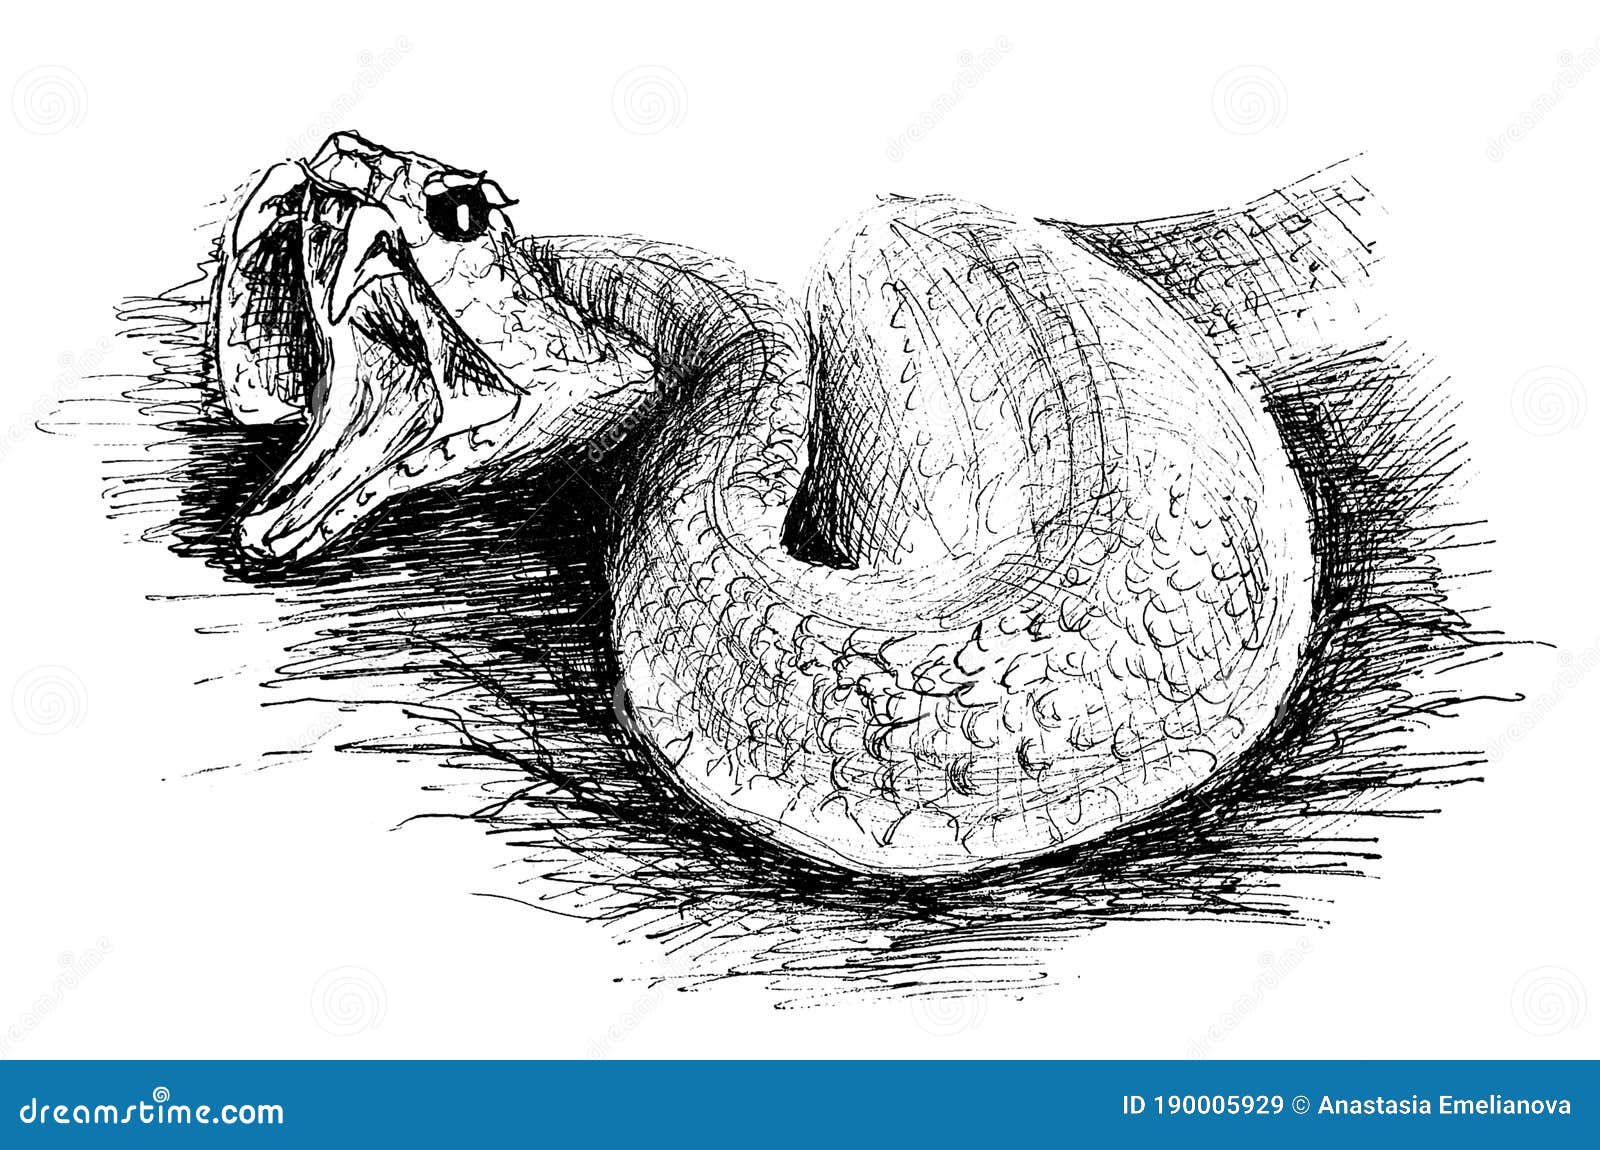 Angry snake ink drawing stock illustration. Illustration of adder ...